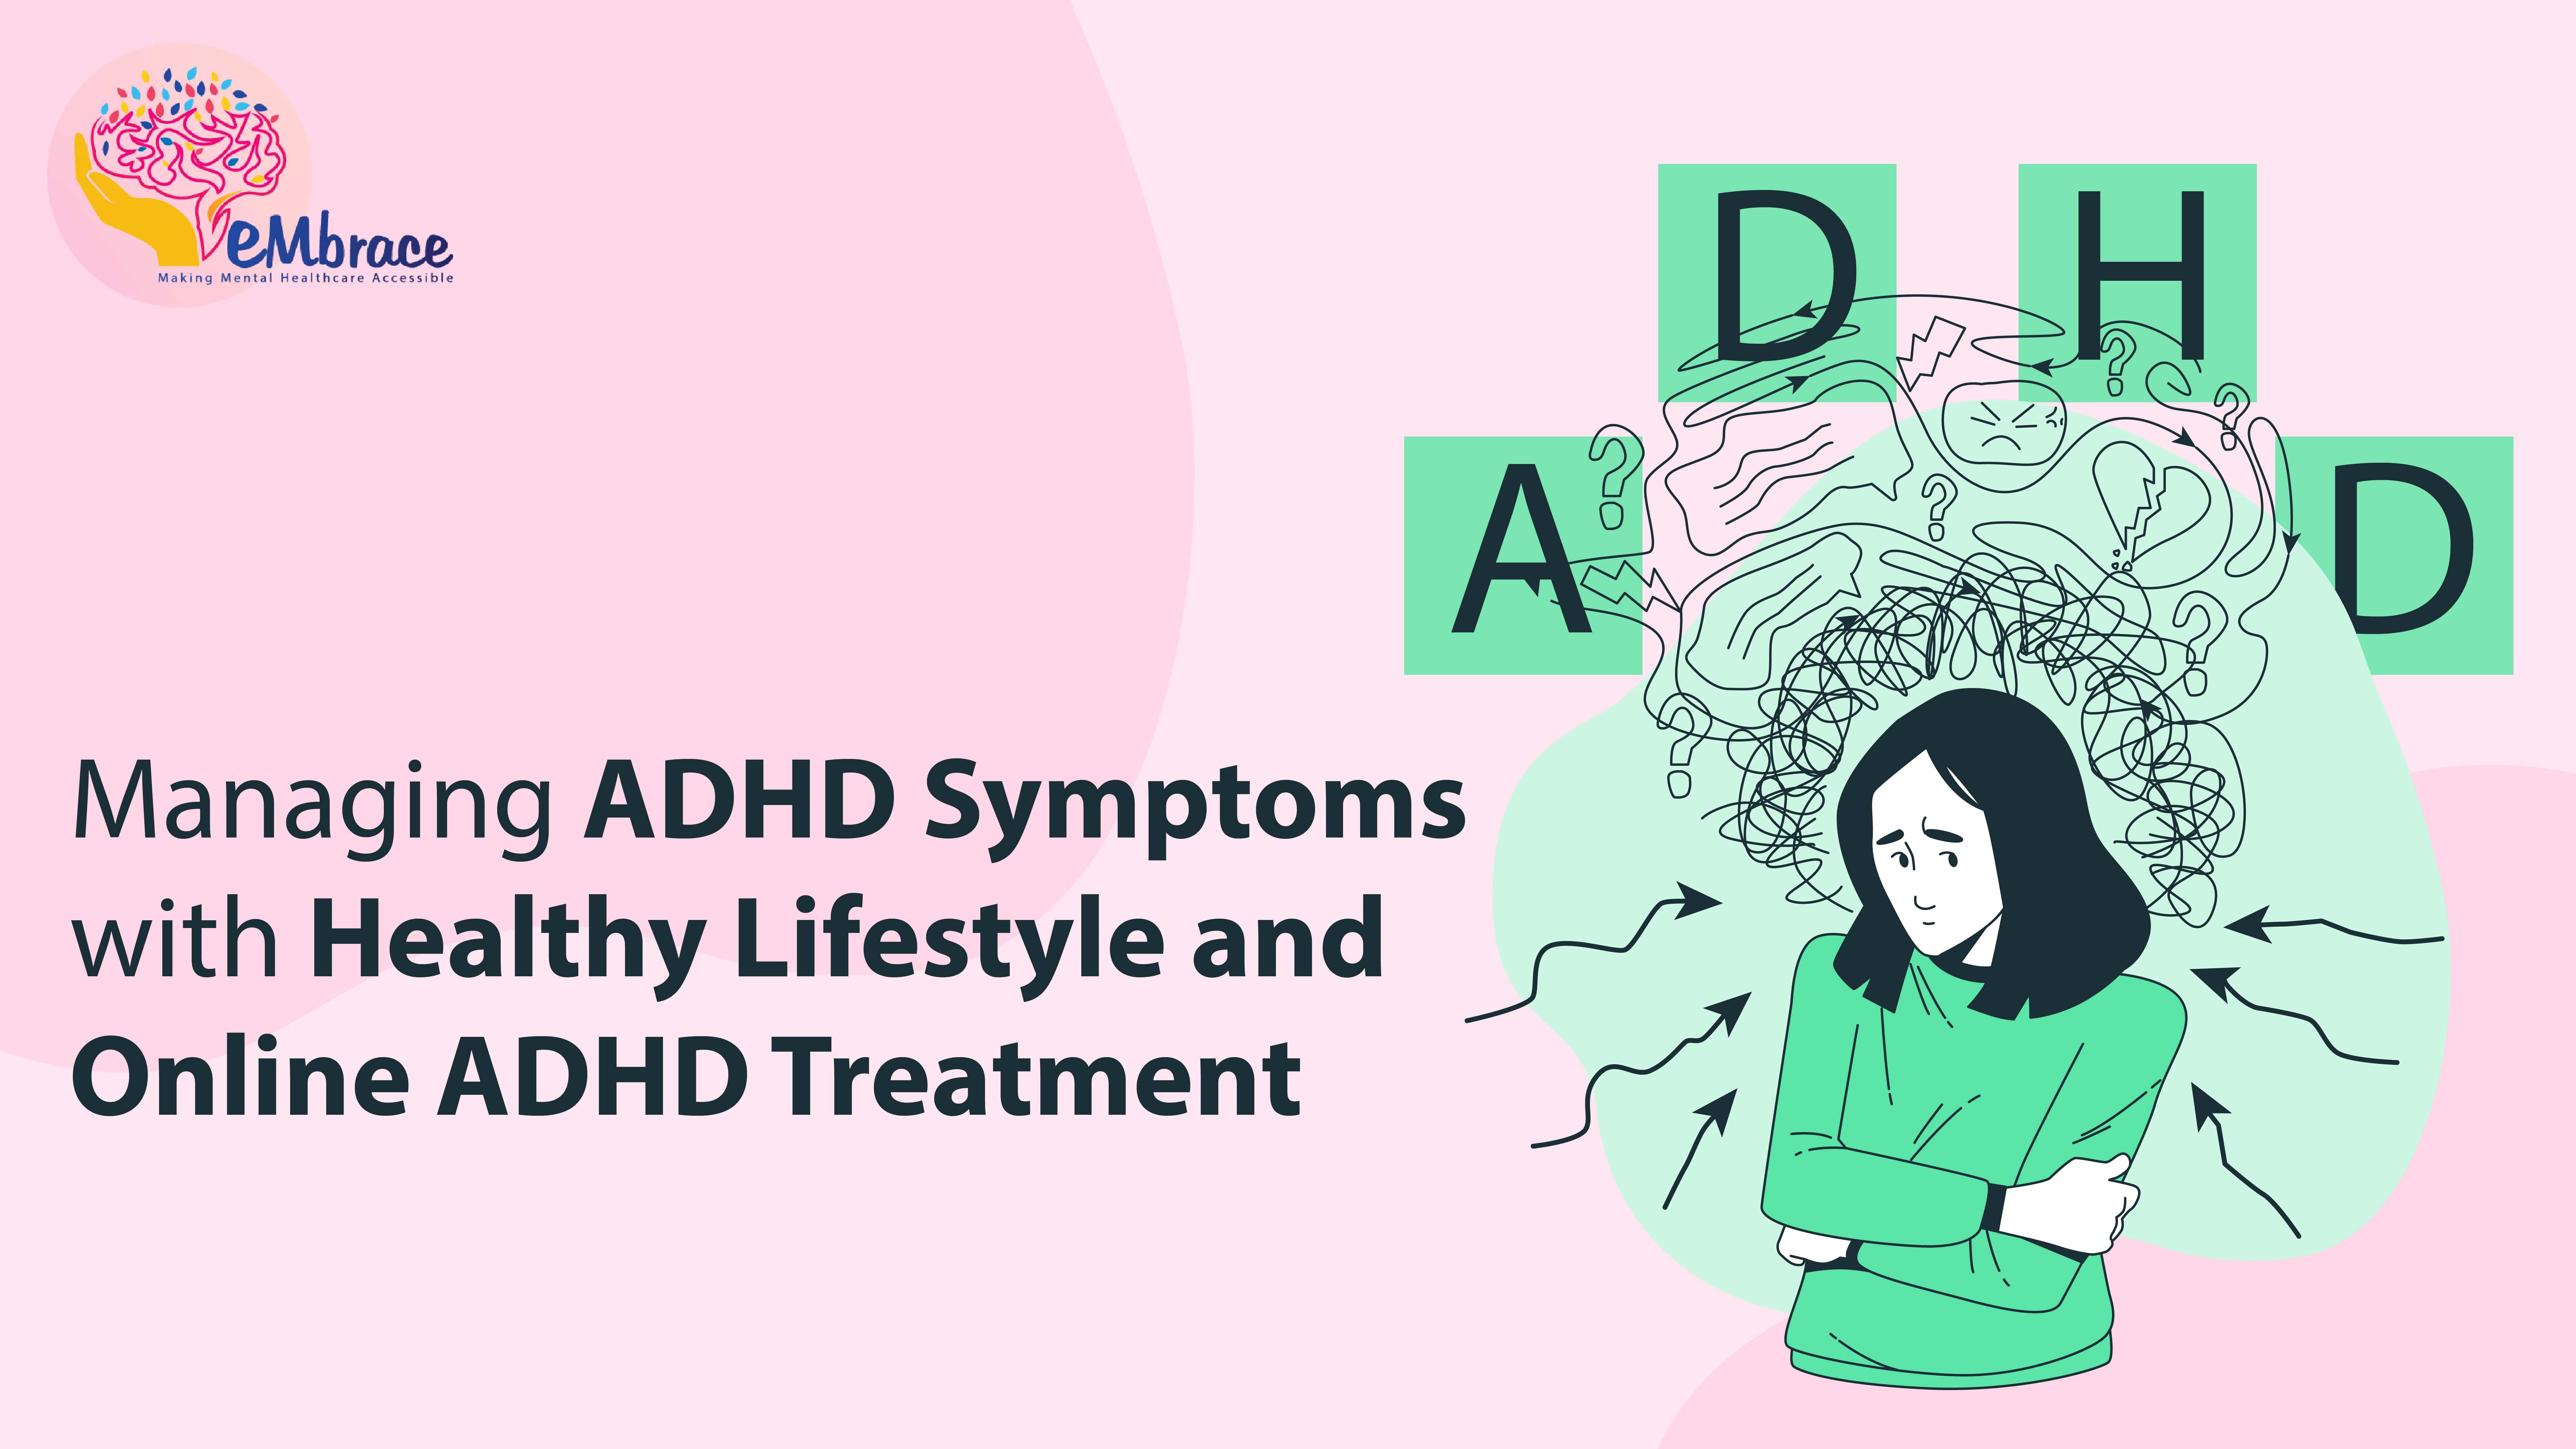 Online ADHD treatment